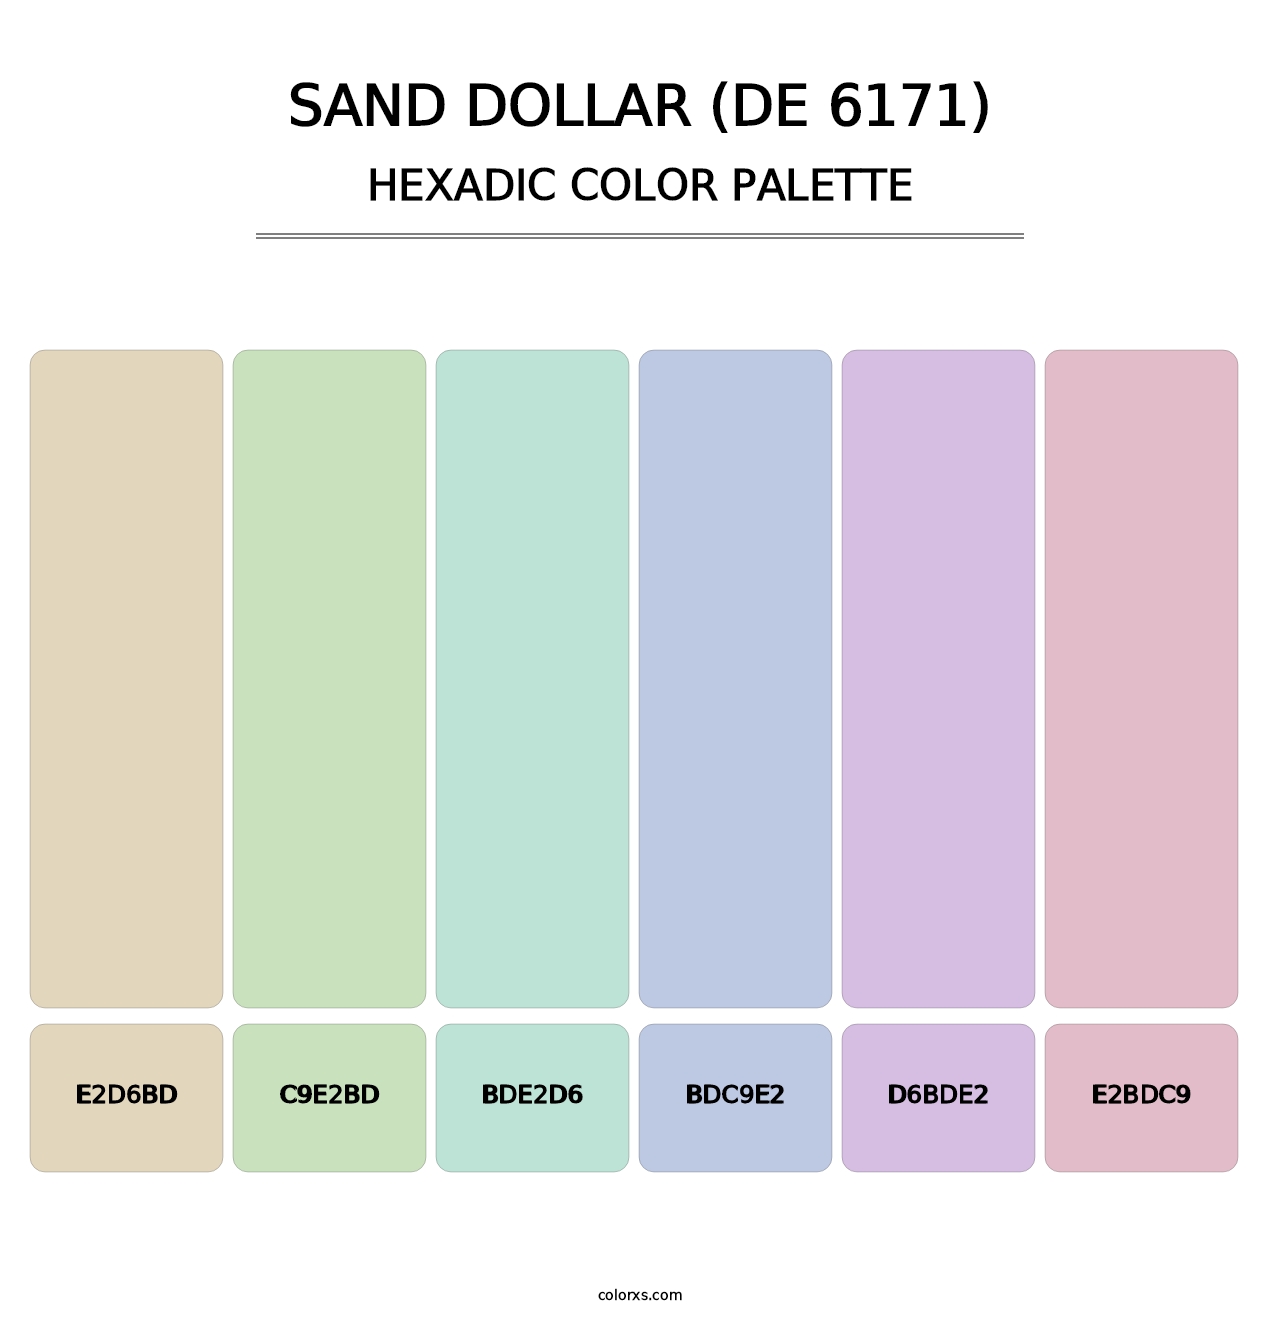 Sand Dollar (DE 6171) - Hexadic Color Palette